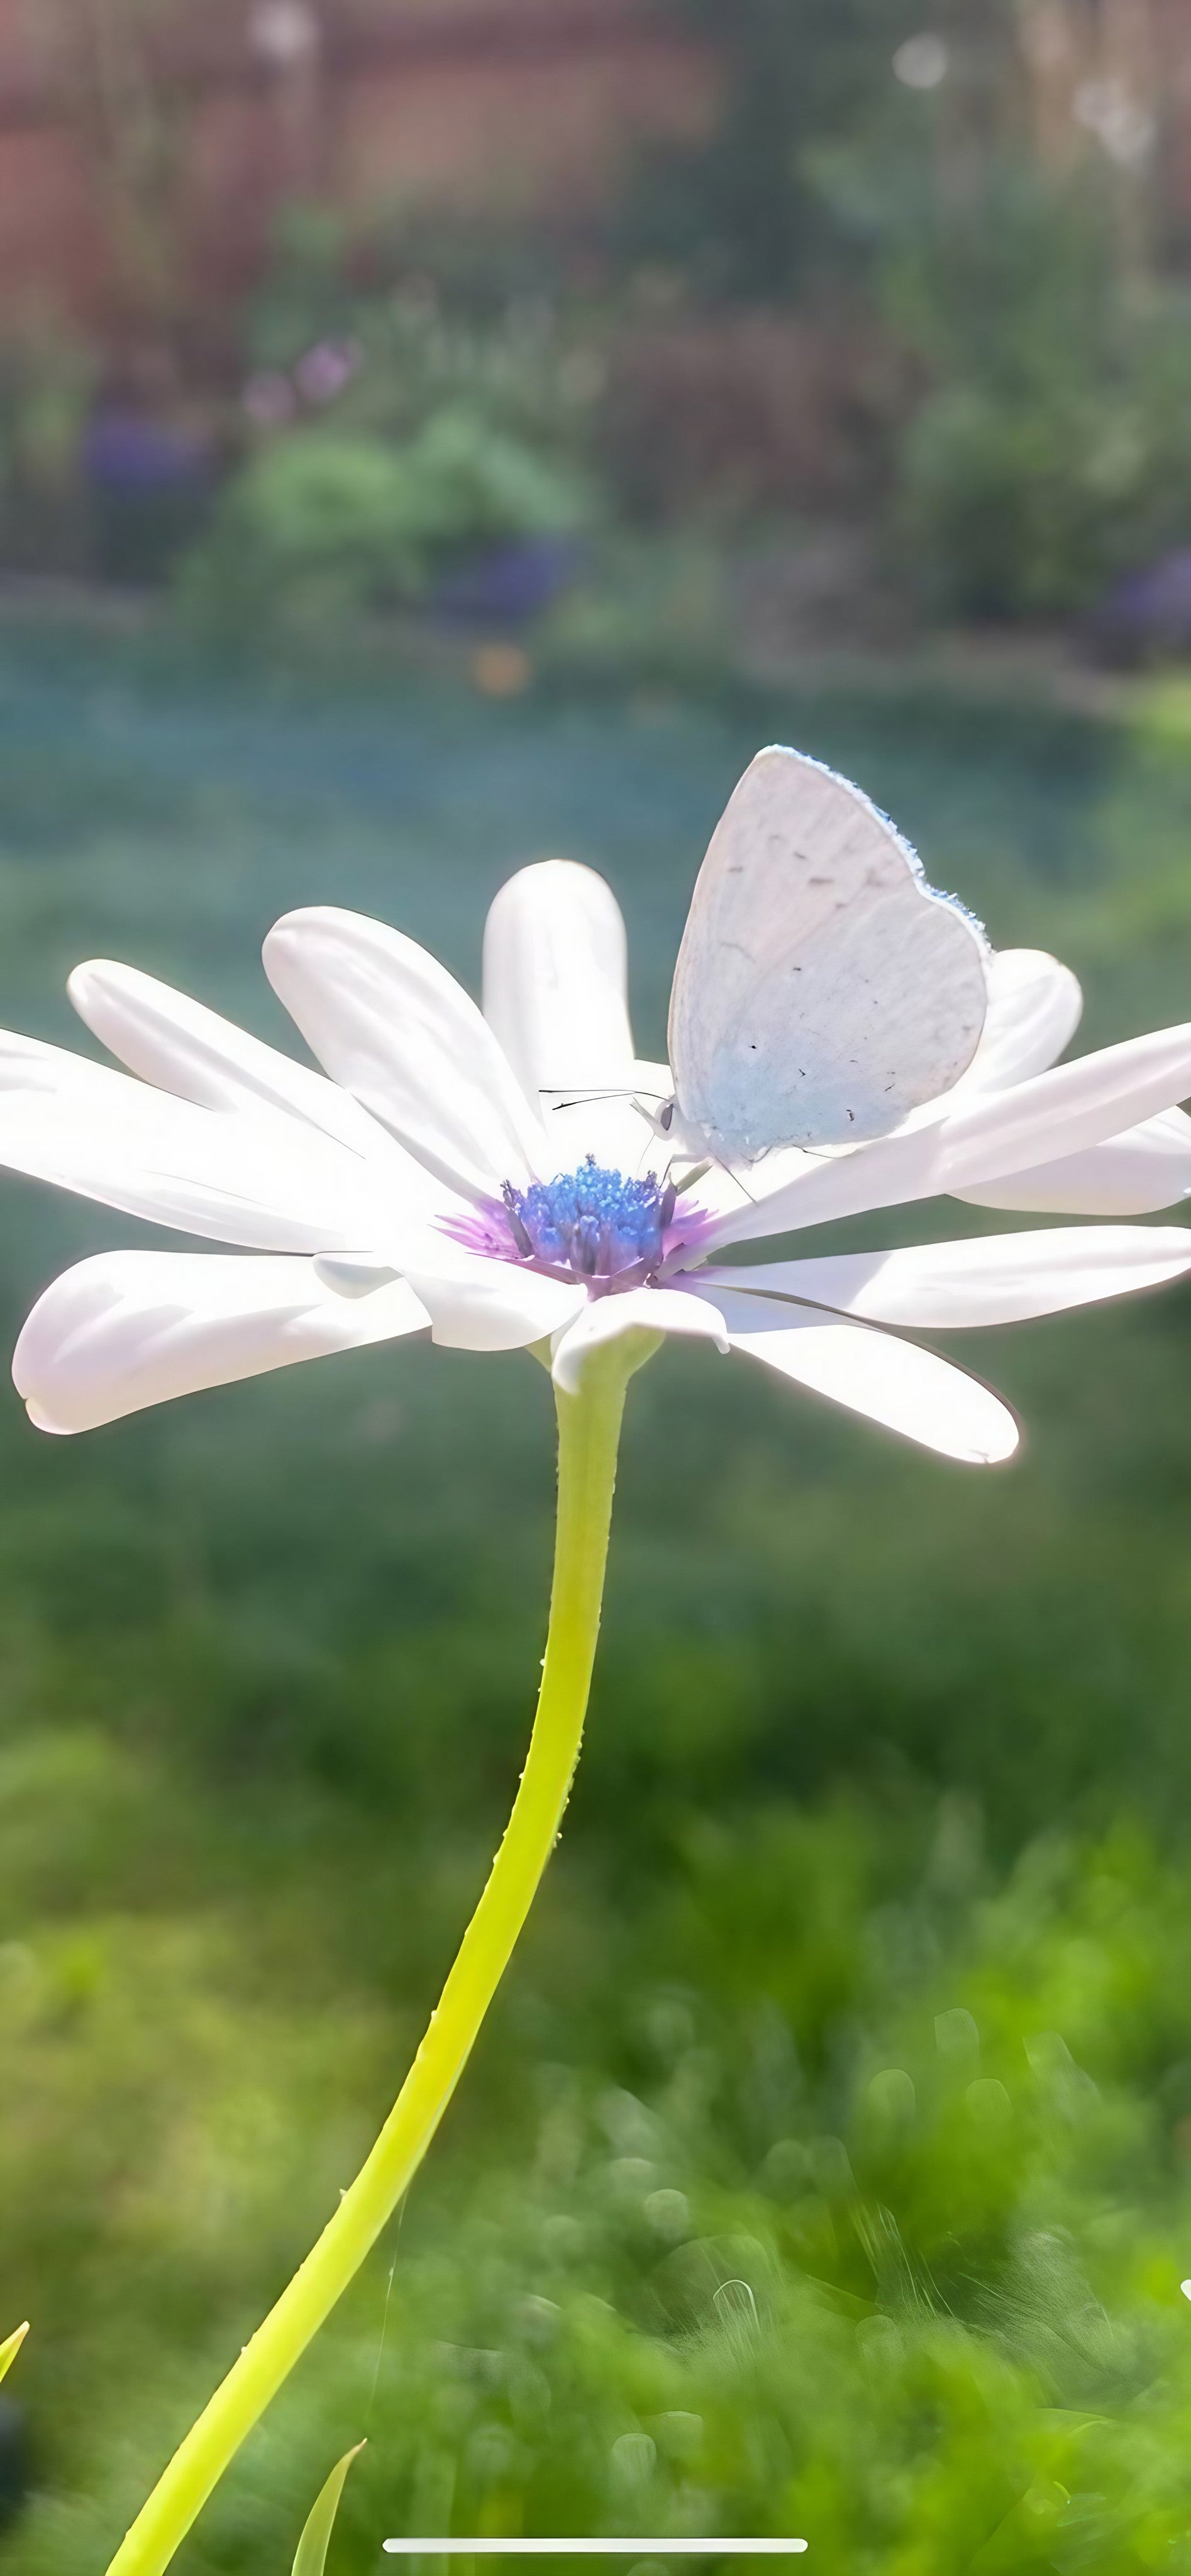 Osteospermum Sky and Ice flower with distinctive blue center